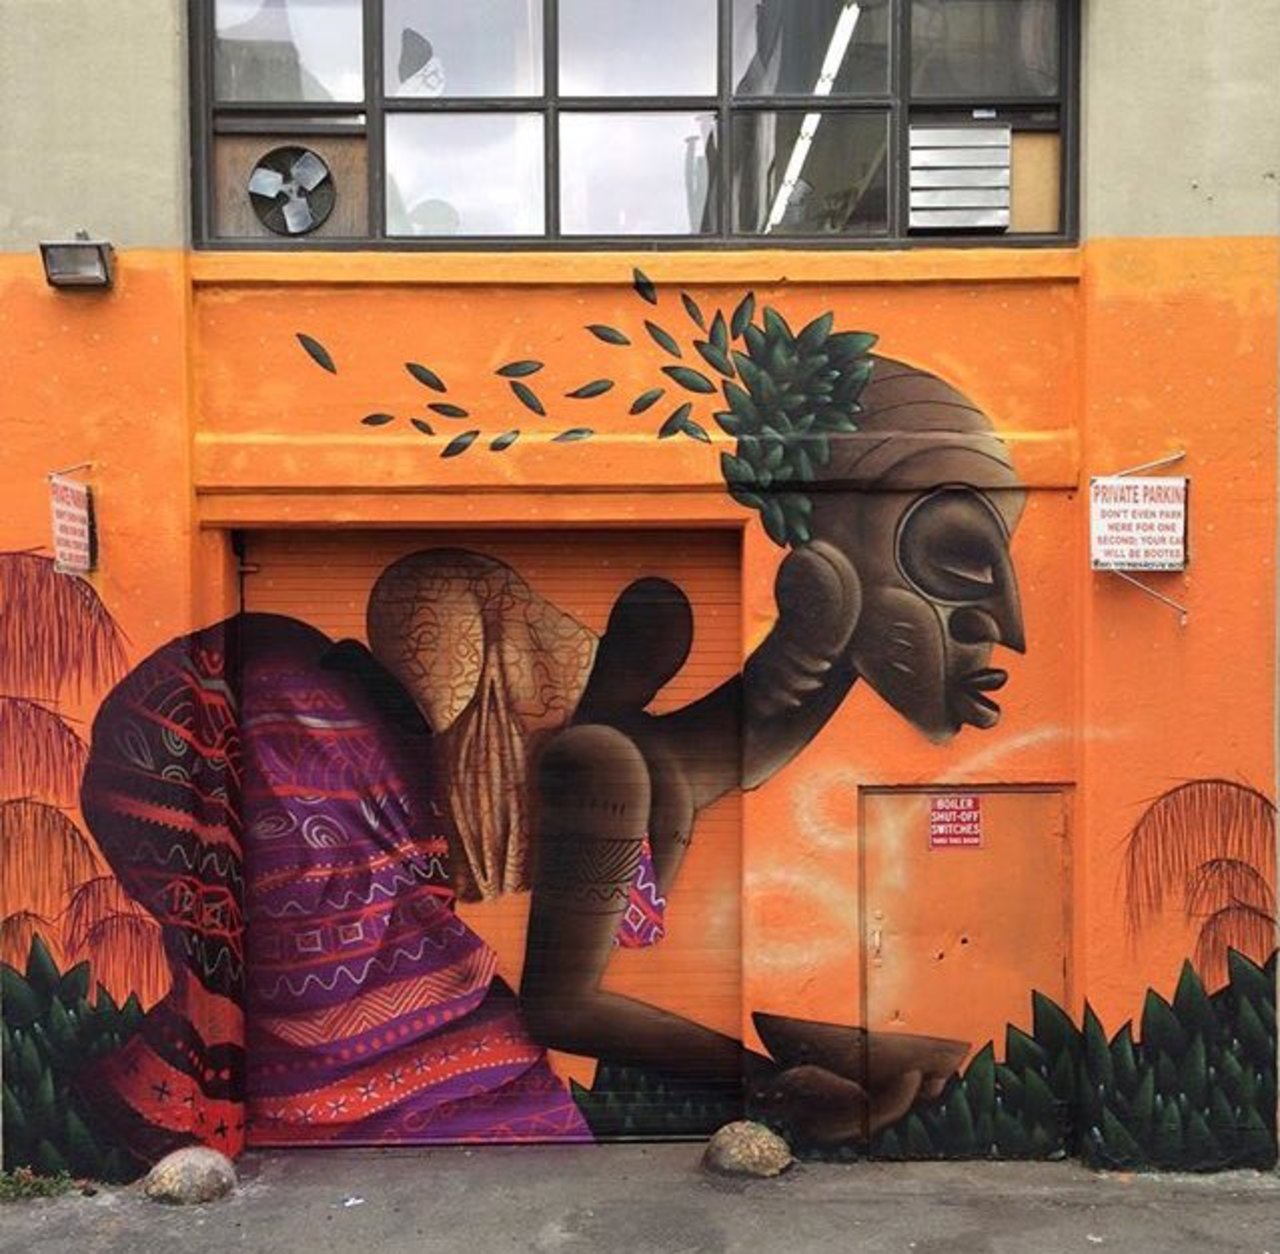 encore du talent.....@GoogleStreetArt
New Street Art by Alexandre Keto in NYC 

#art #graffiti #mural #streetart https://t.co/DC2yVXPUt1